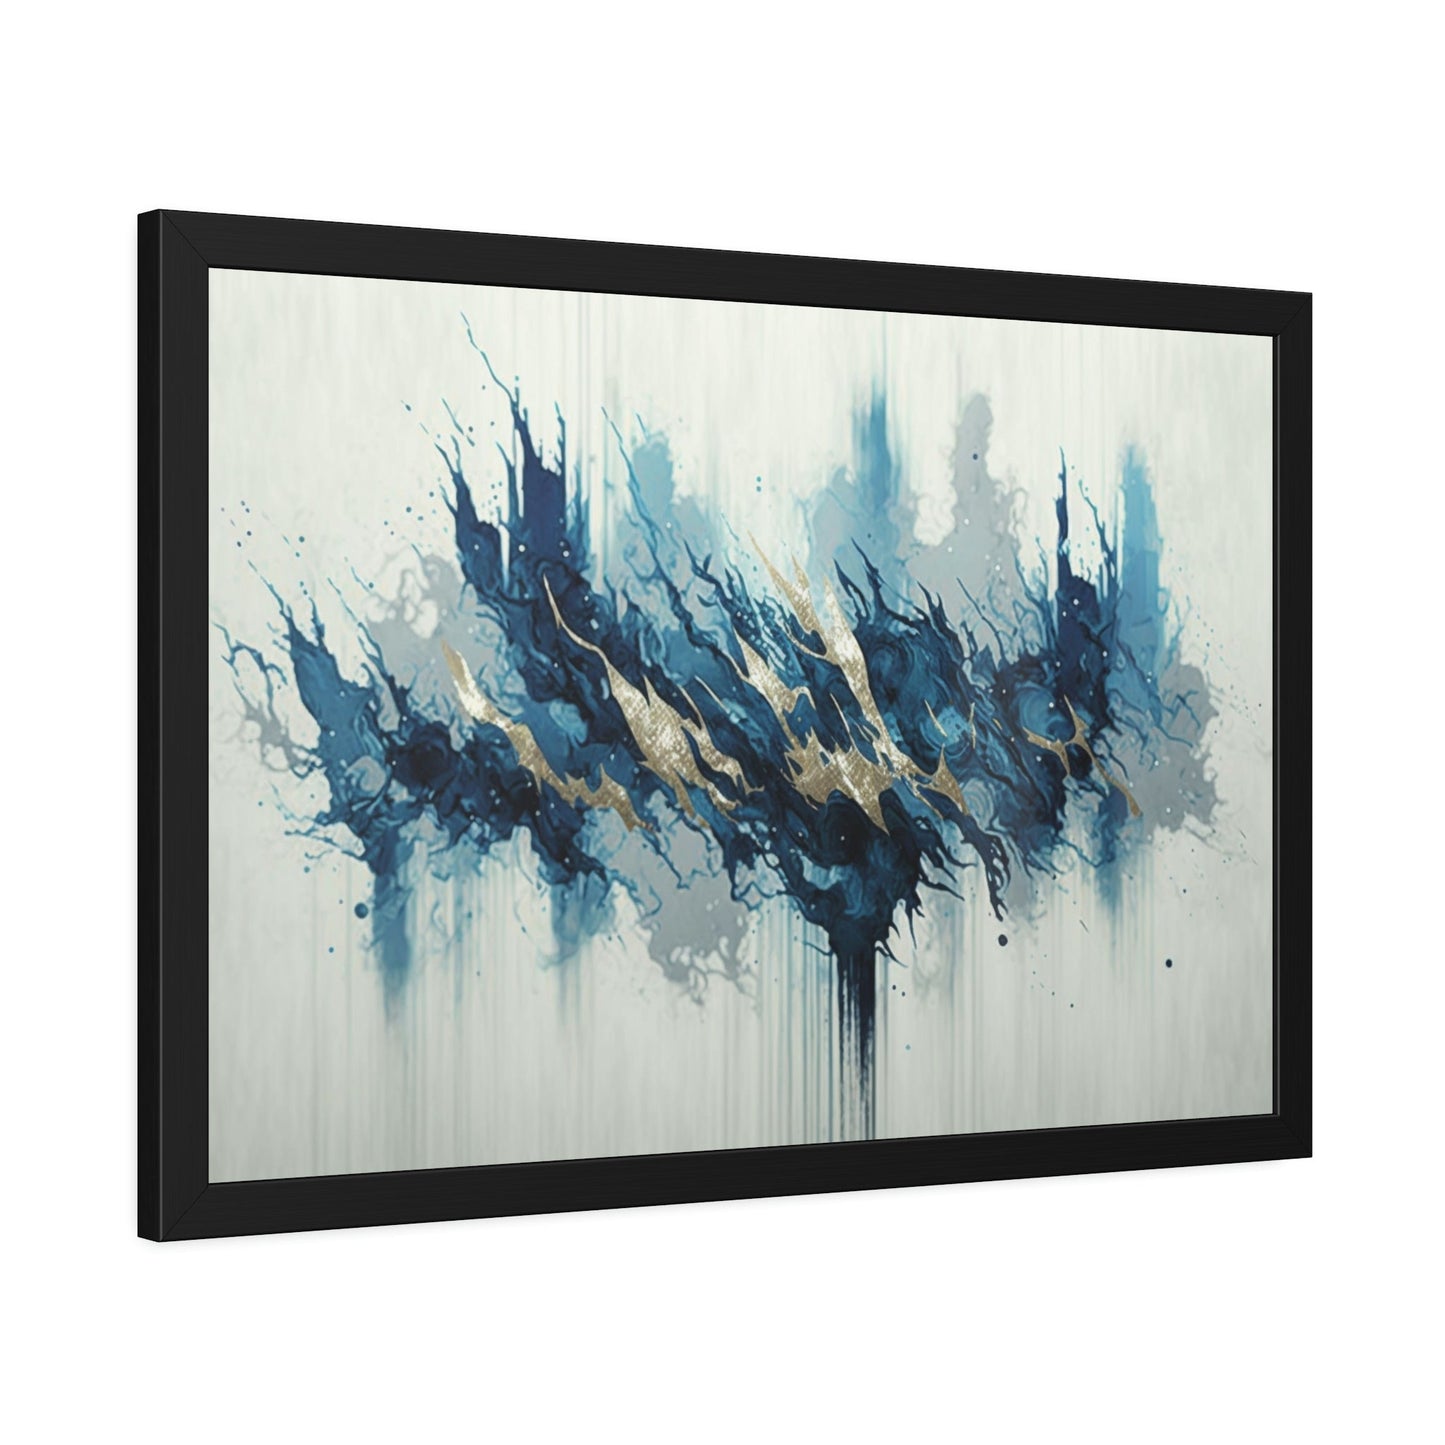 Oceanic Depths: A Framed Canvas & Poster Print of Blue Abstract Art